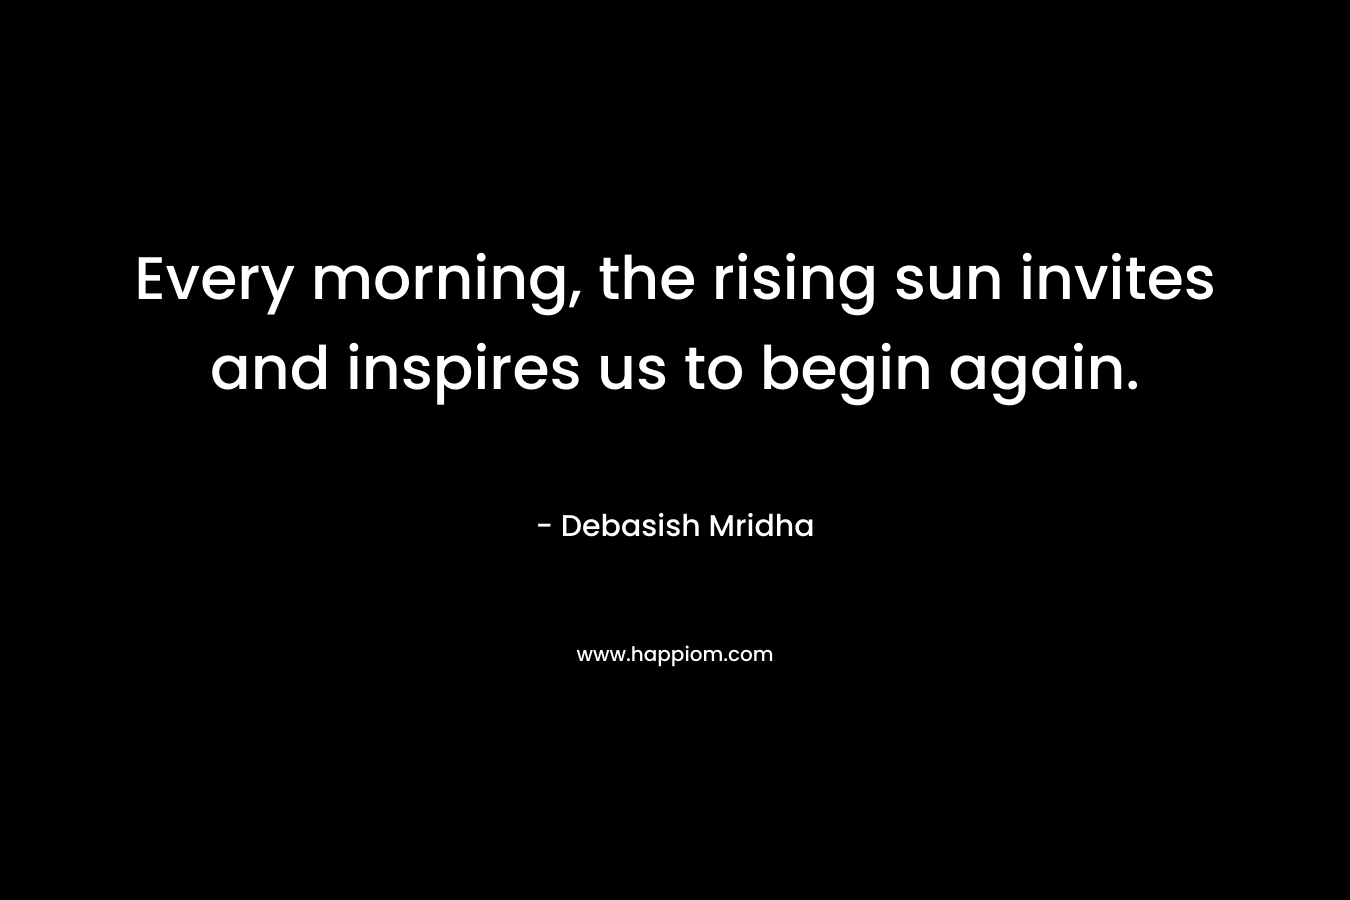 Every morning, the rising sun invites and inspires us to begin again. – Debasish Mridha